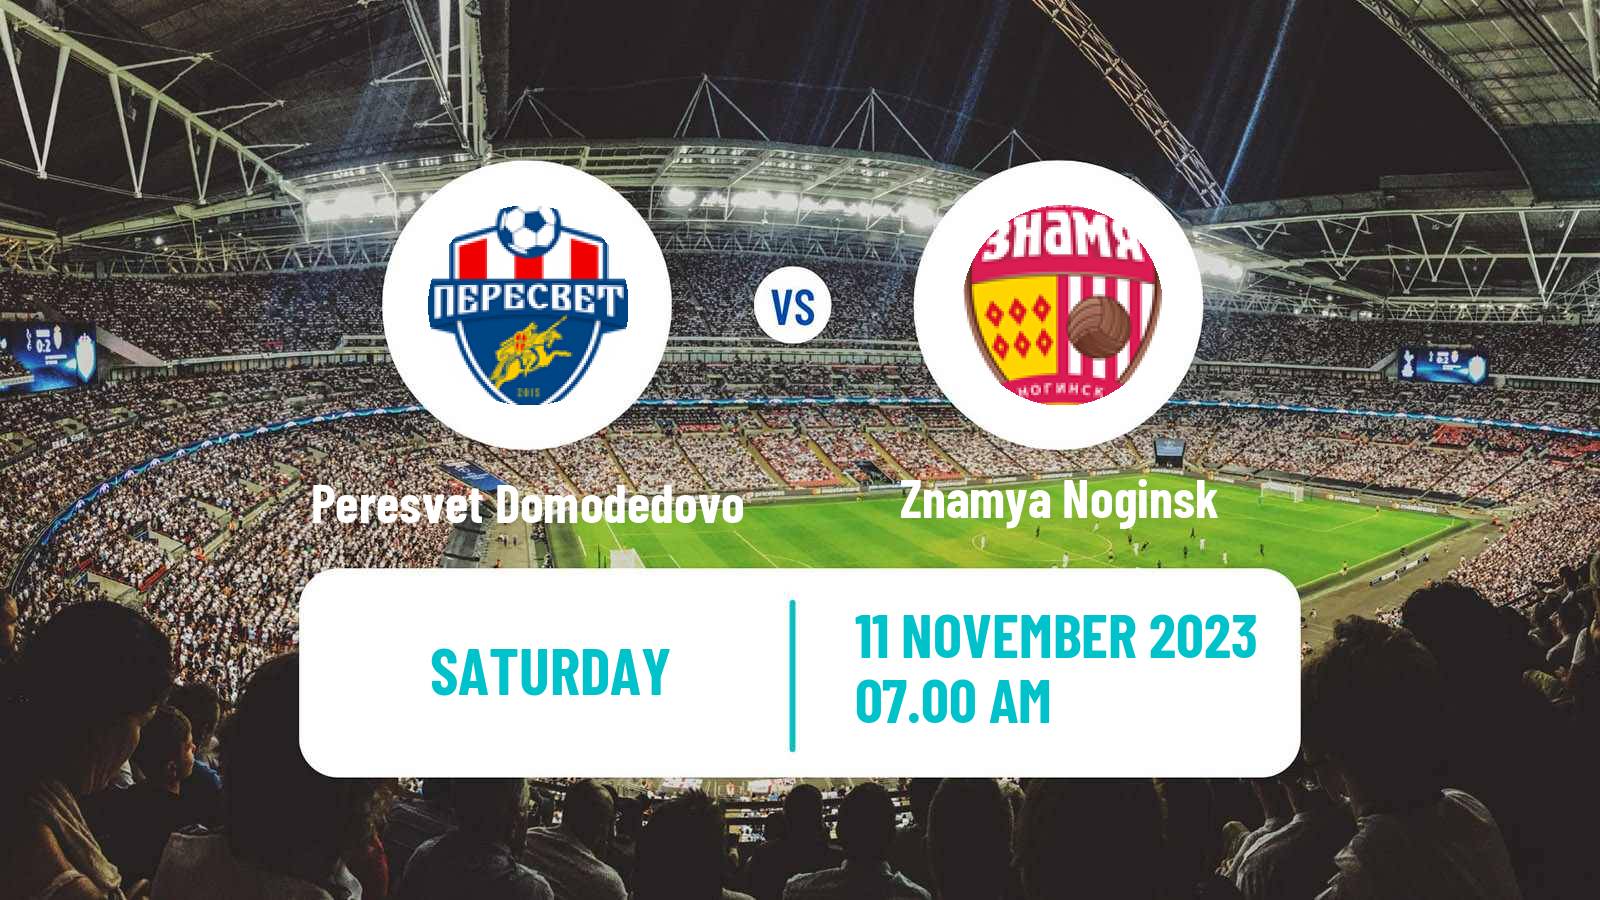 Soccer FNL 2 Division B Group 3 Peresvet Domodedovo - Znamya Noginsk